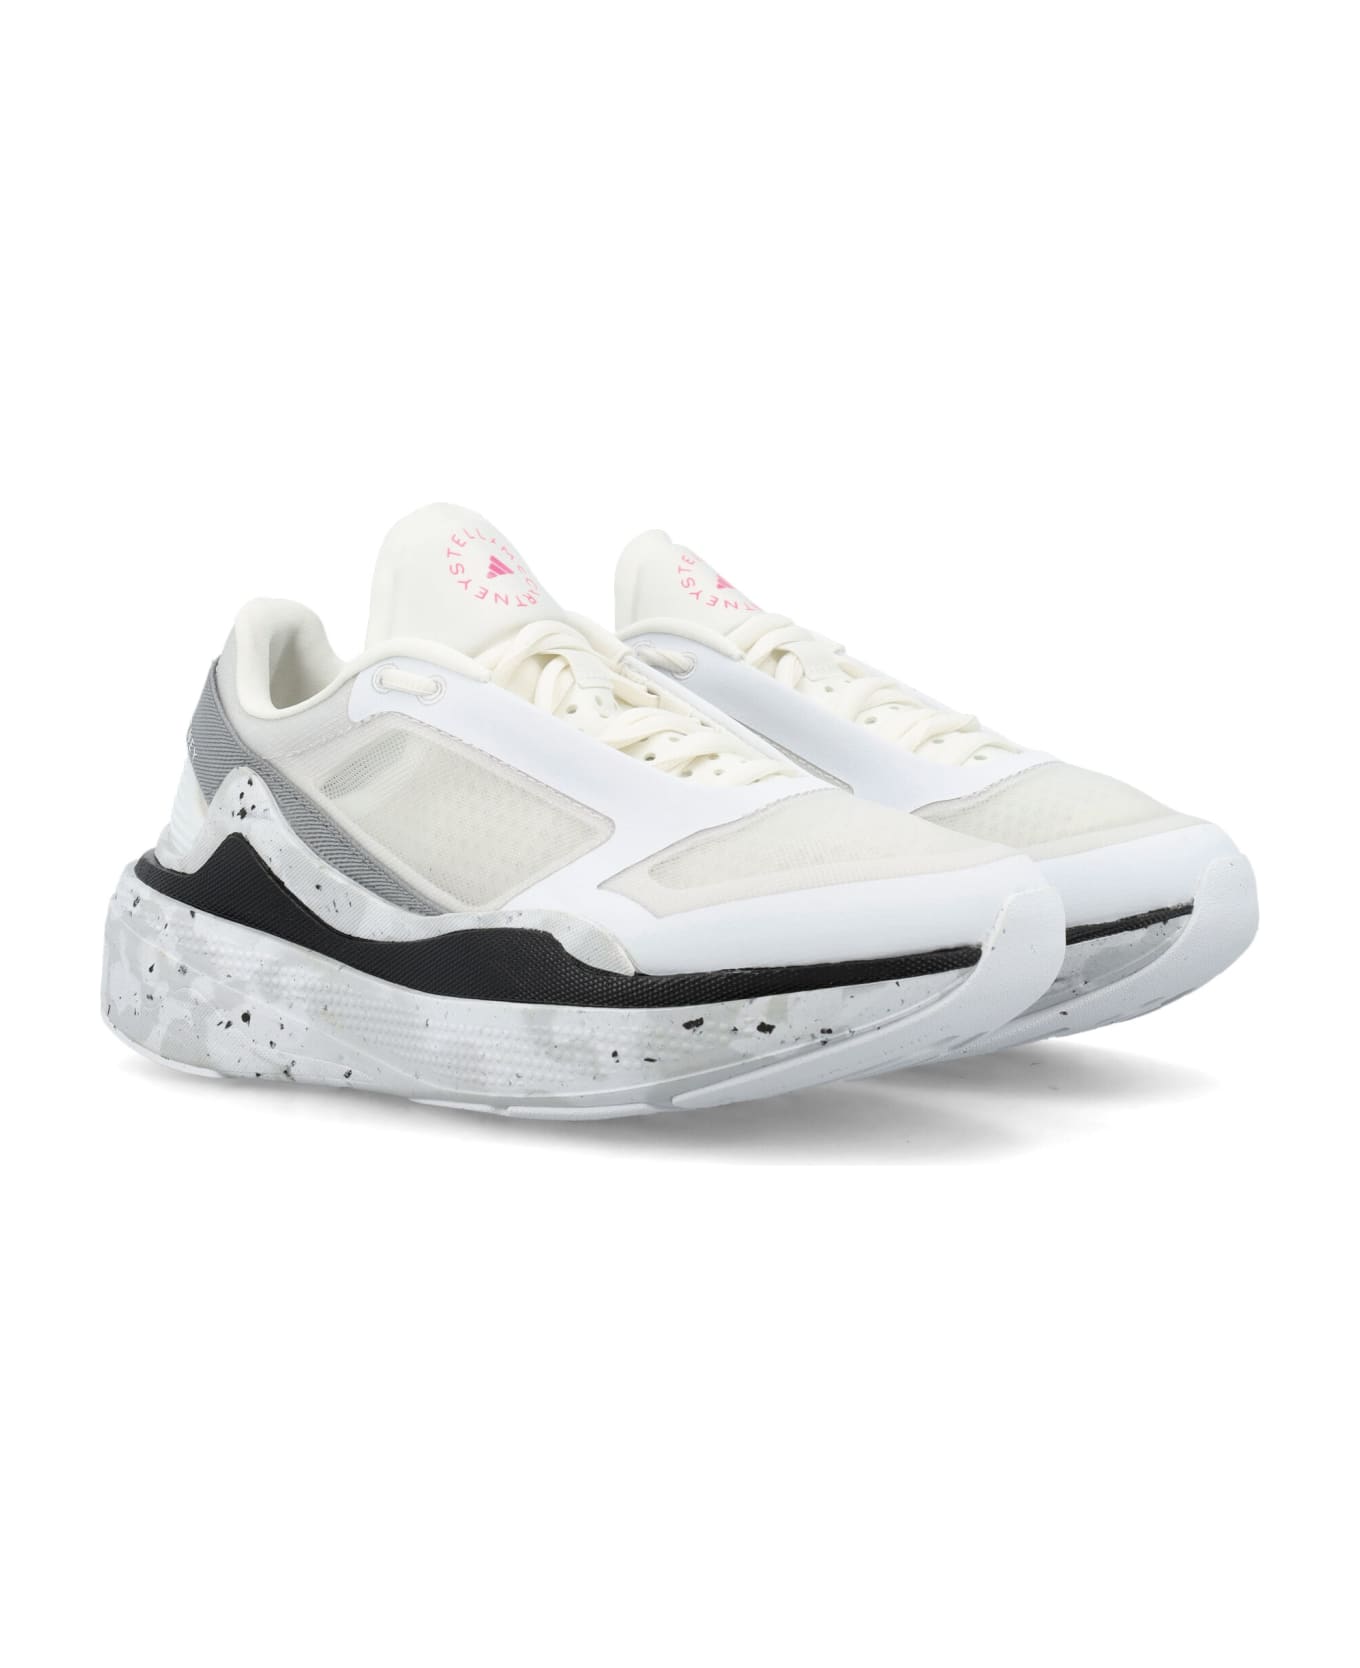 Adidas by Stella McCartney Eartlight Mesh Running Shoes - WHITE/GREY/BLACK